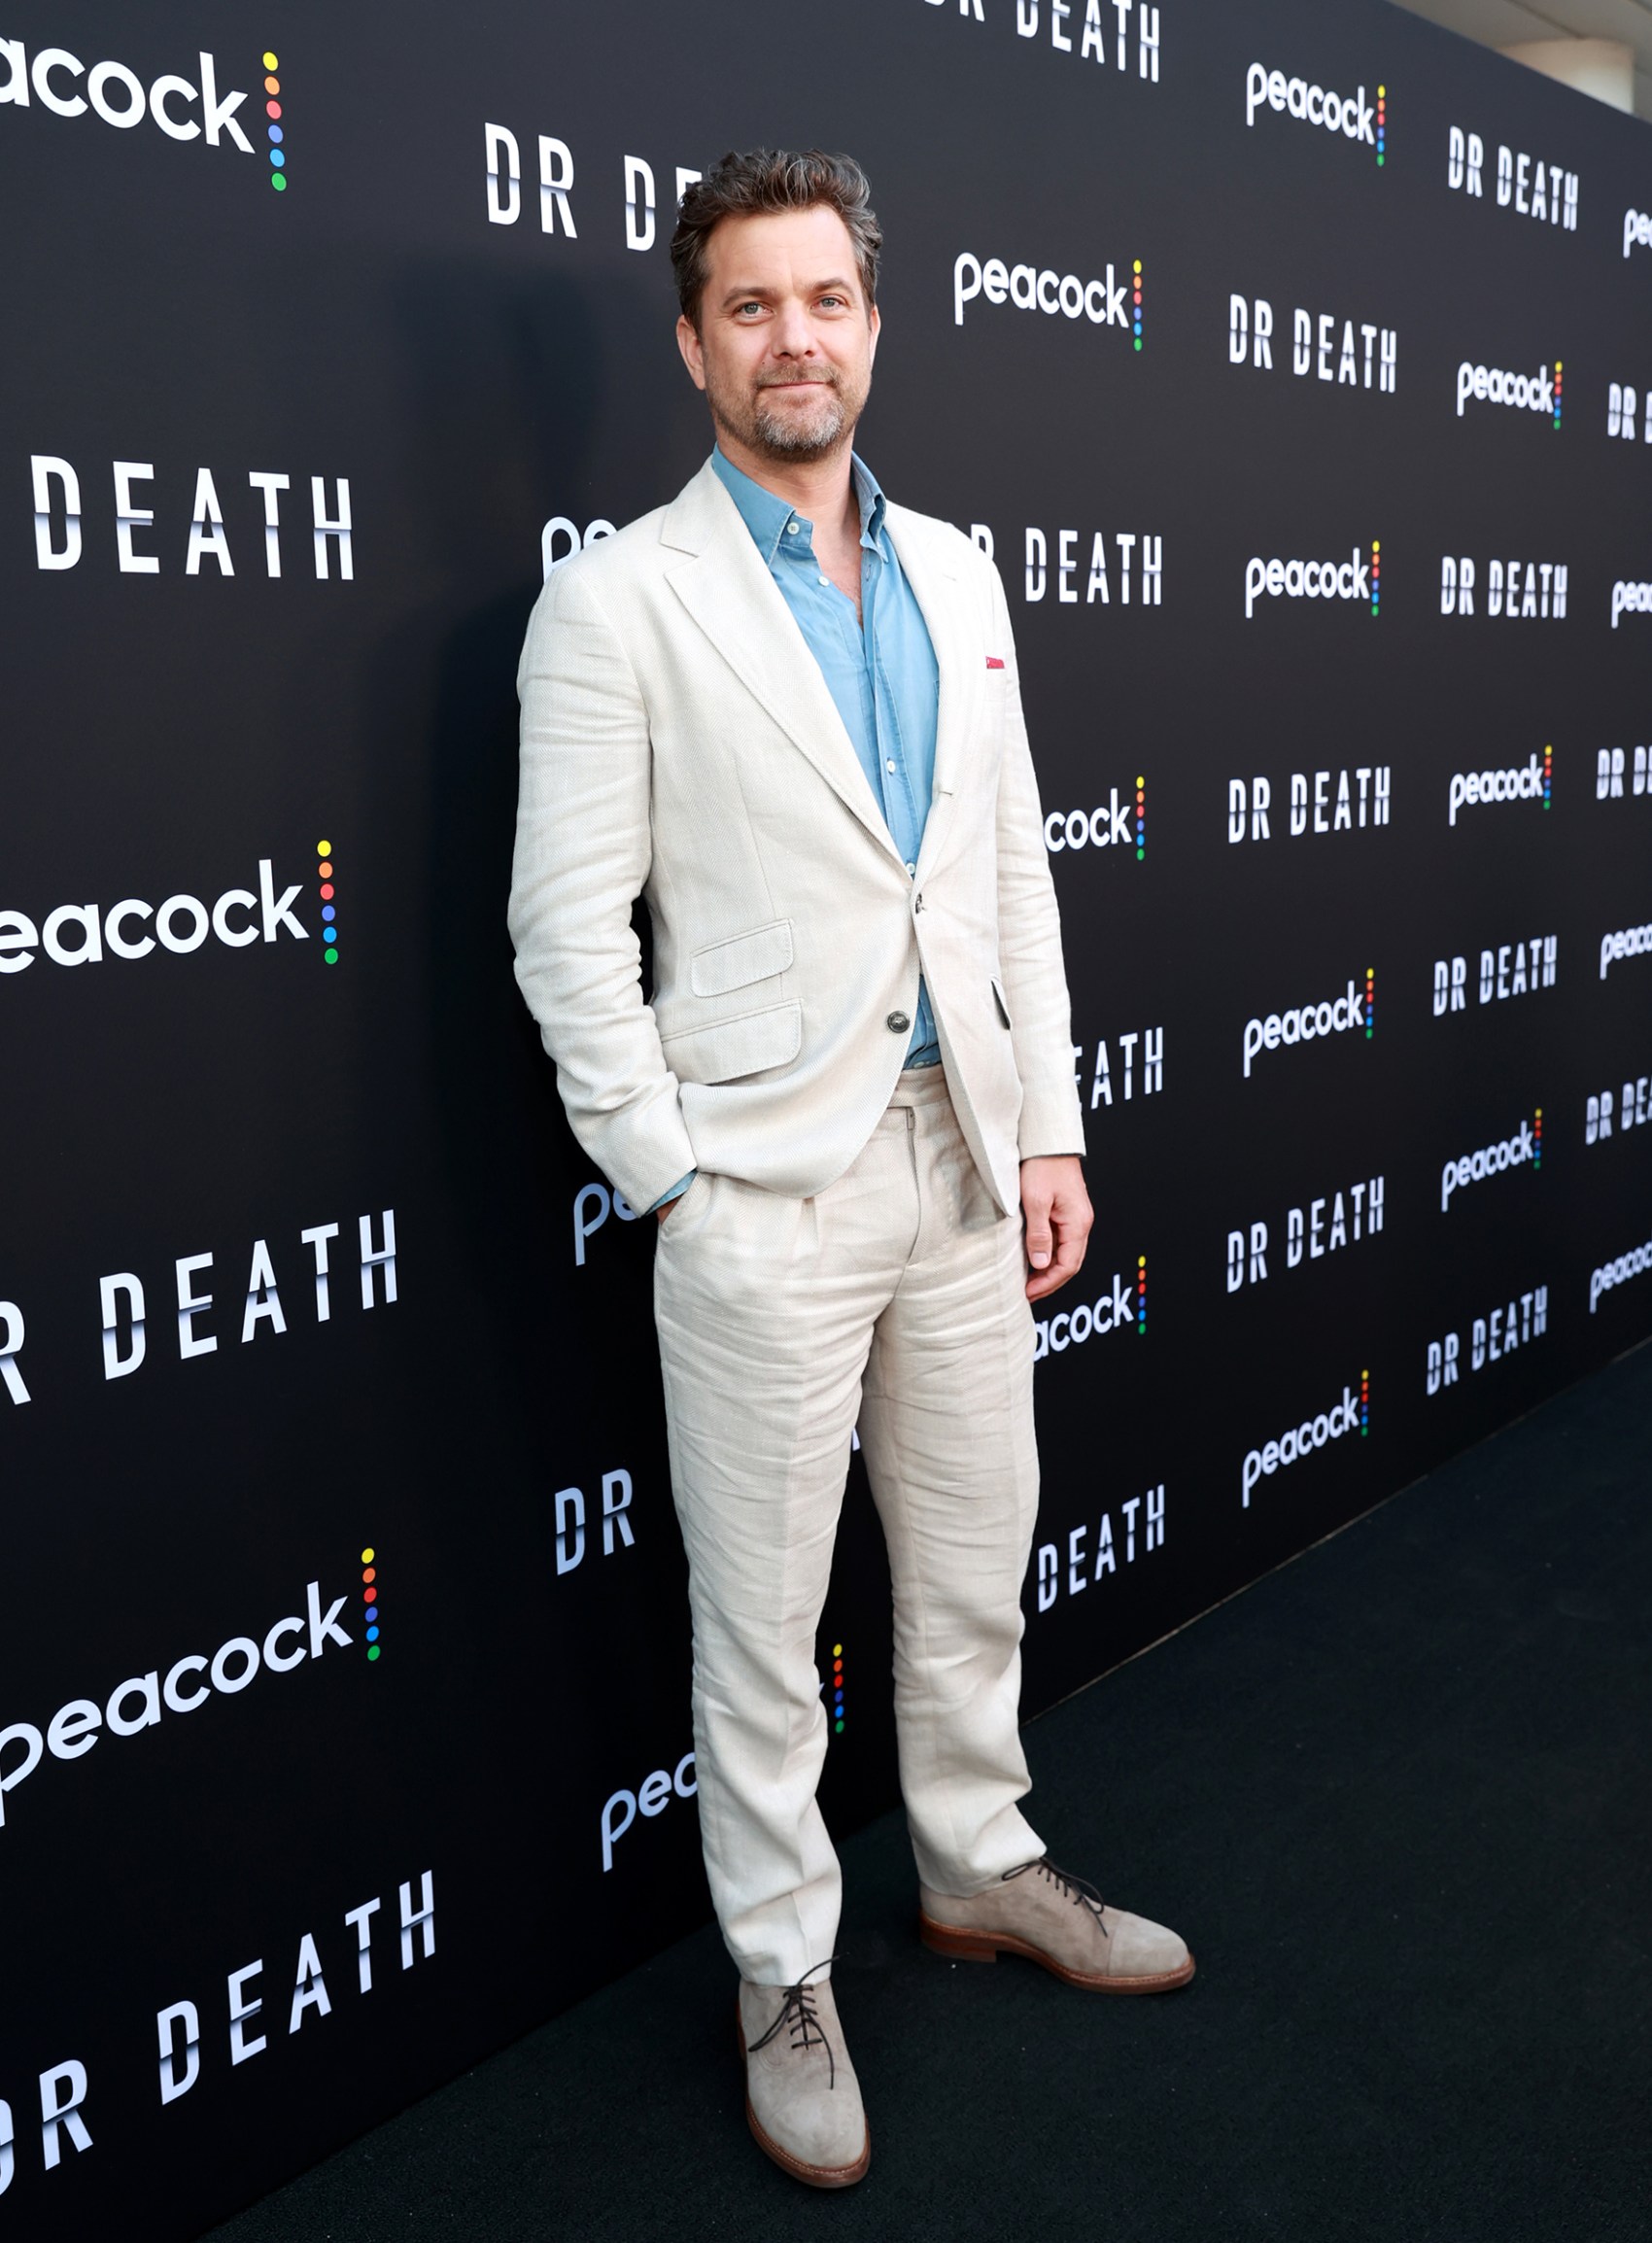 Peacock's New Series "Dr. Death" Los Angeles Premiere - Arrivals